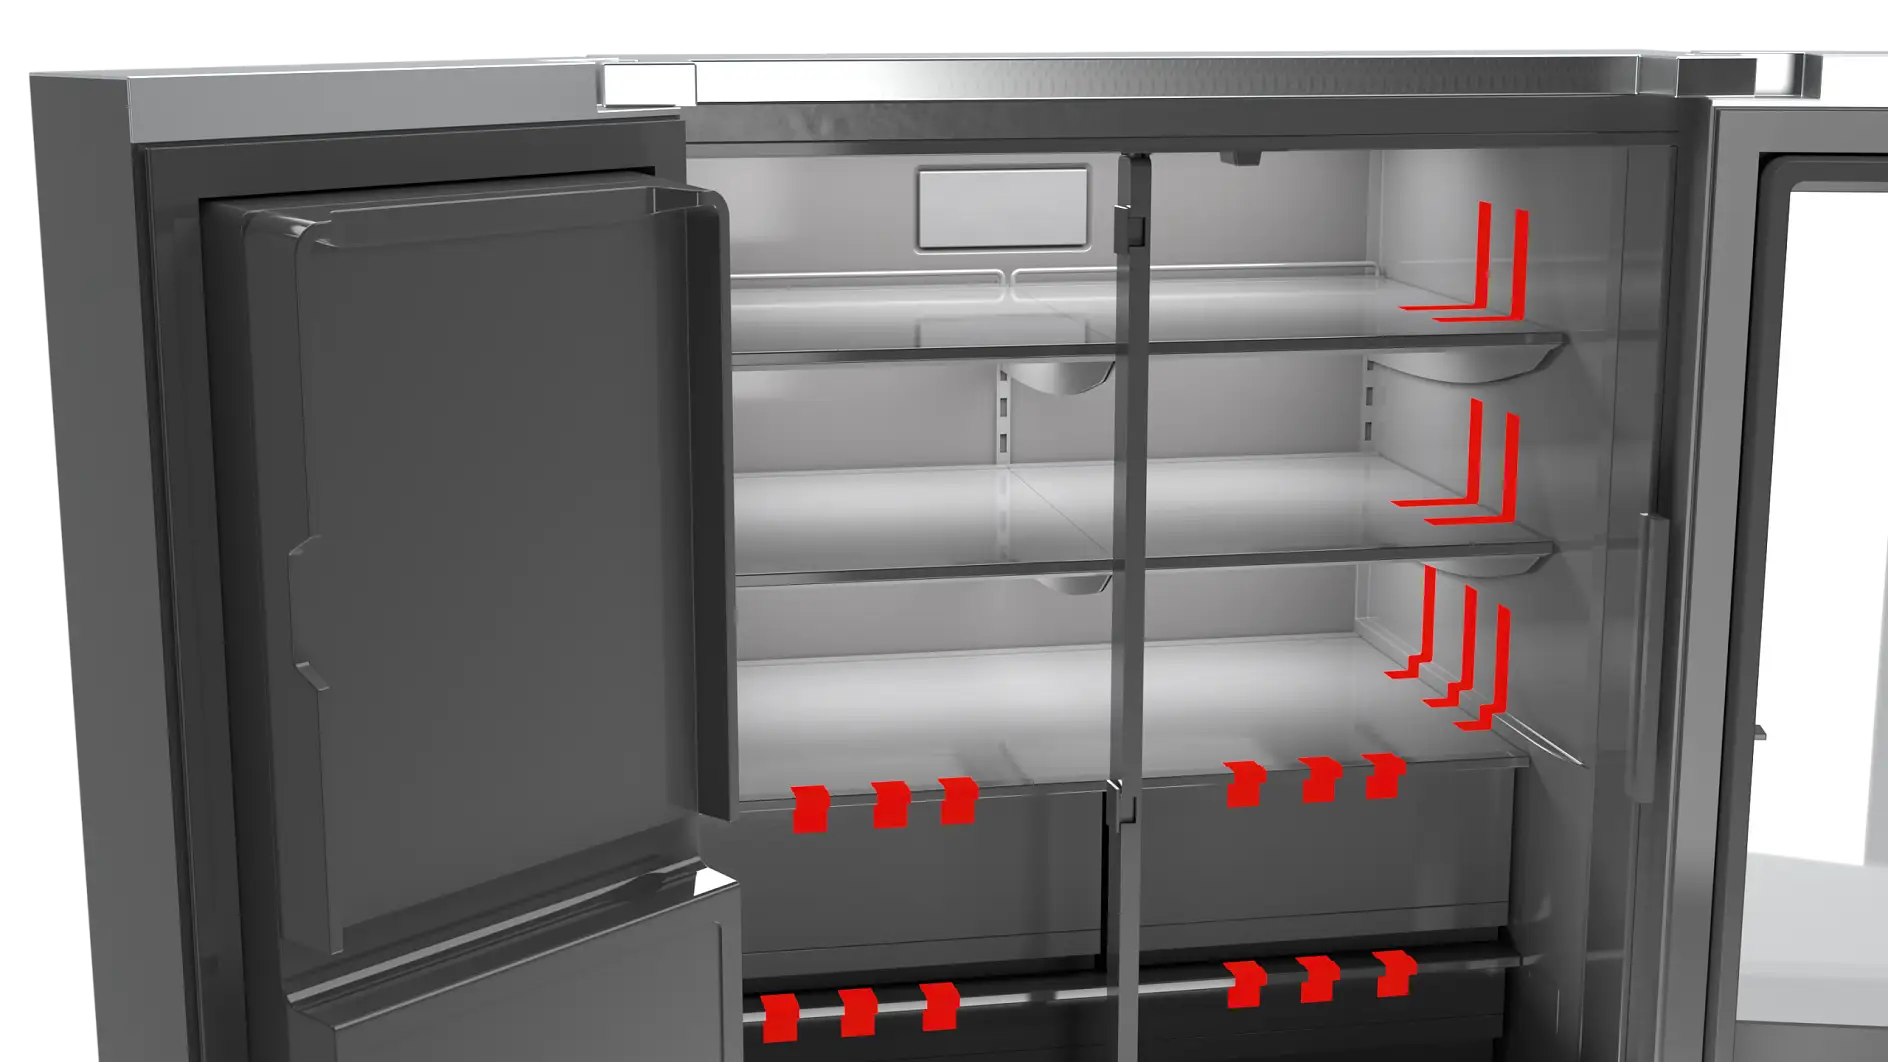 Appliances refrigerator strapping transport securing illustration